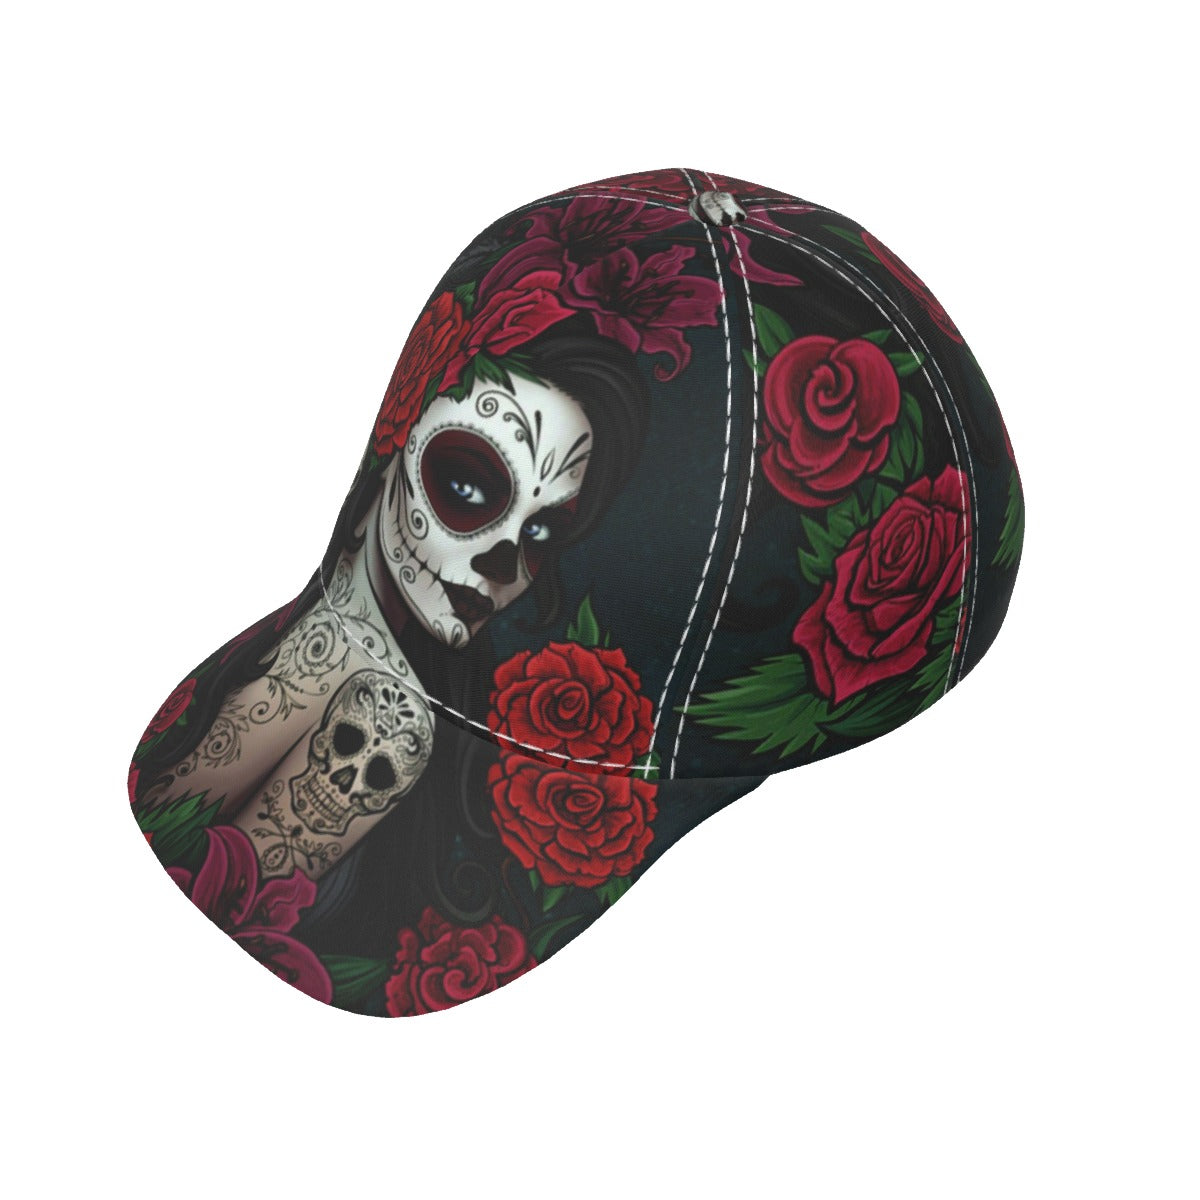 Sugar skull All-Over Print Peaked Cap Hat